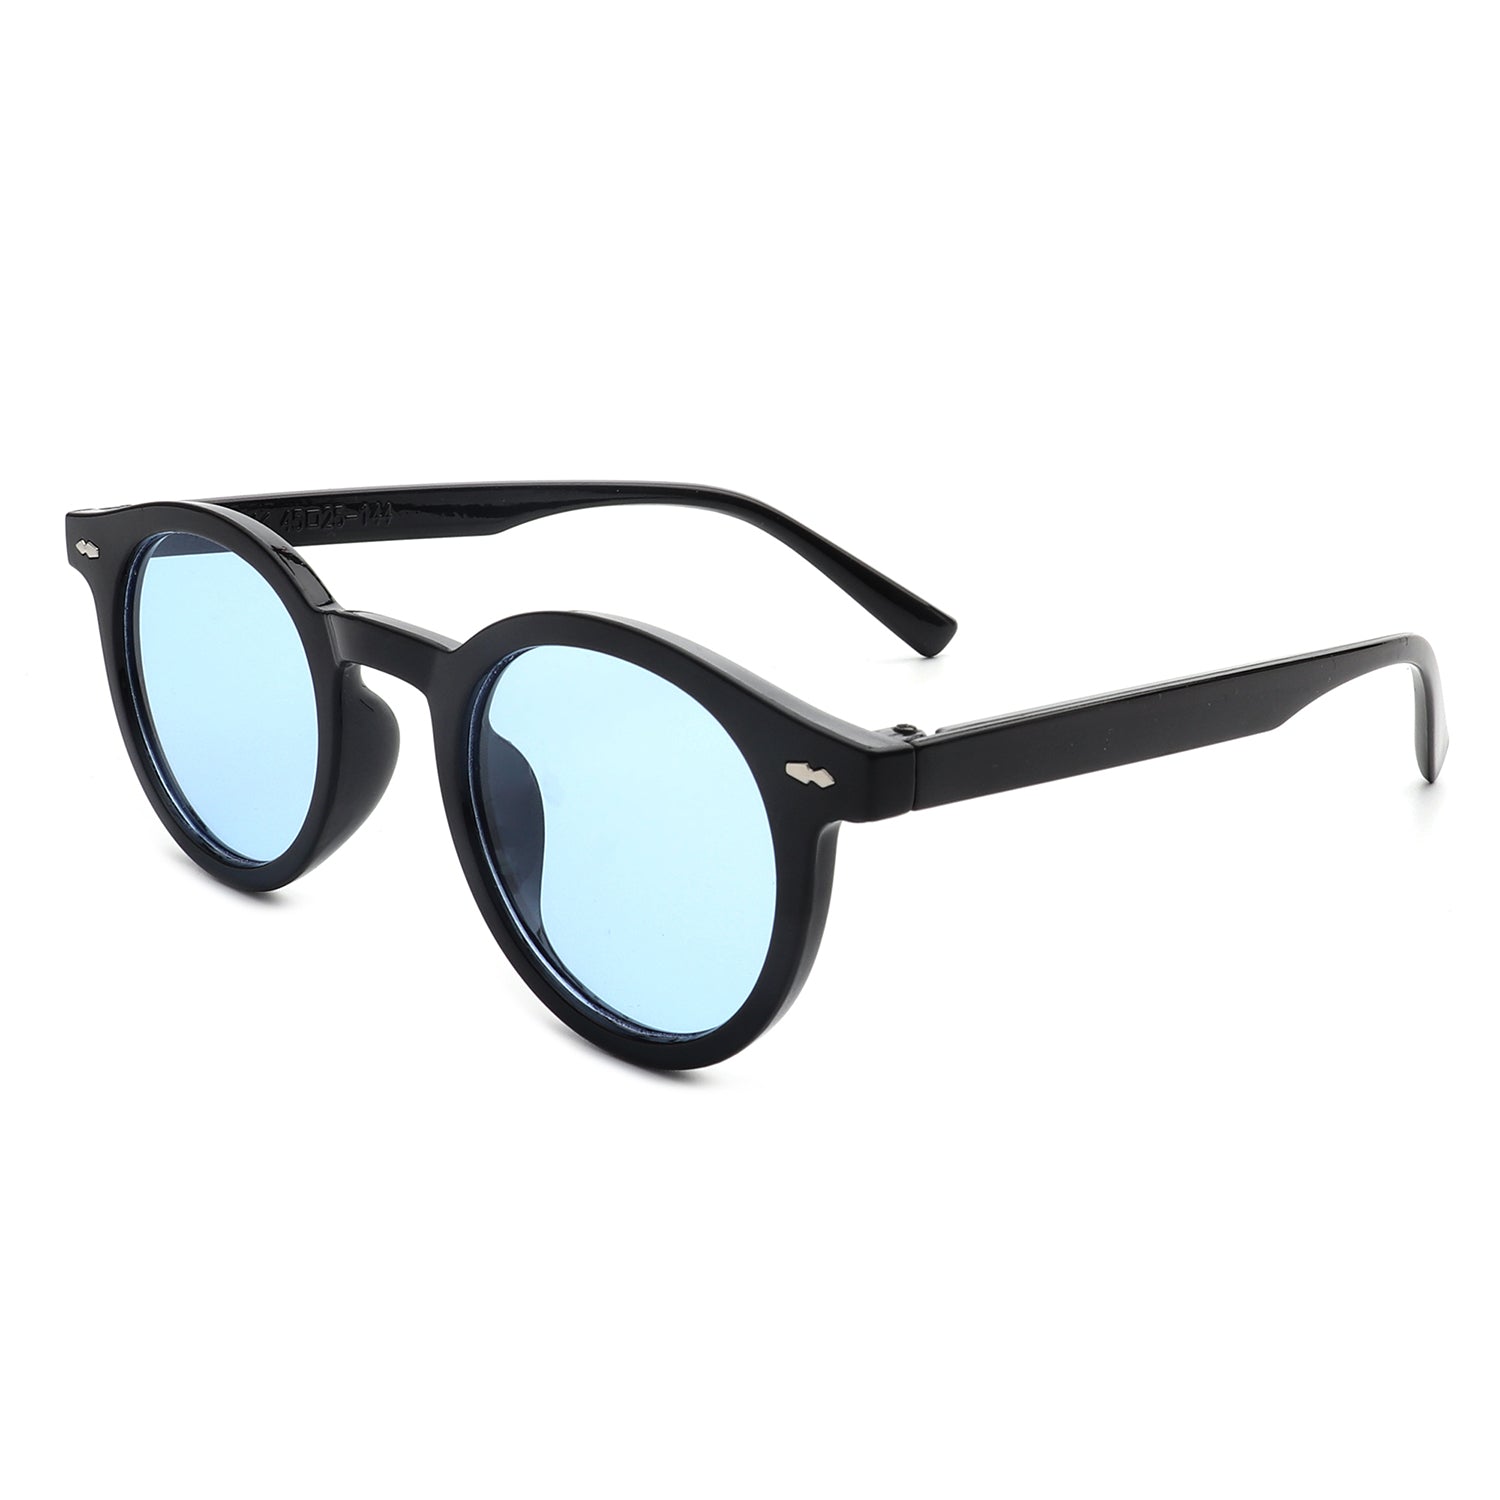 HS18046-2 - Retro Circle Round Vintage Tinted Fashion Sunglasses